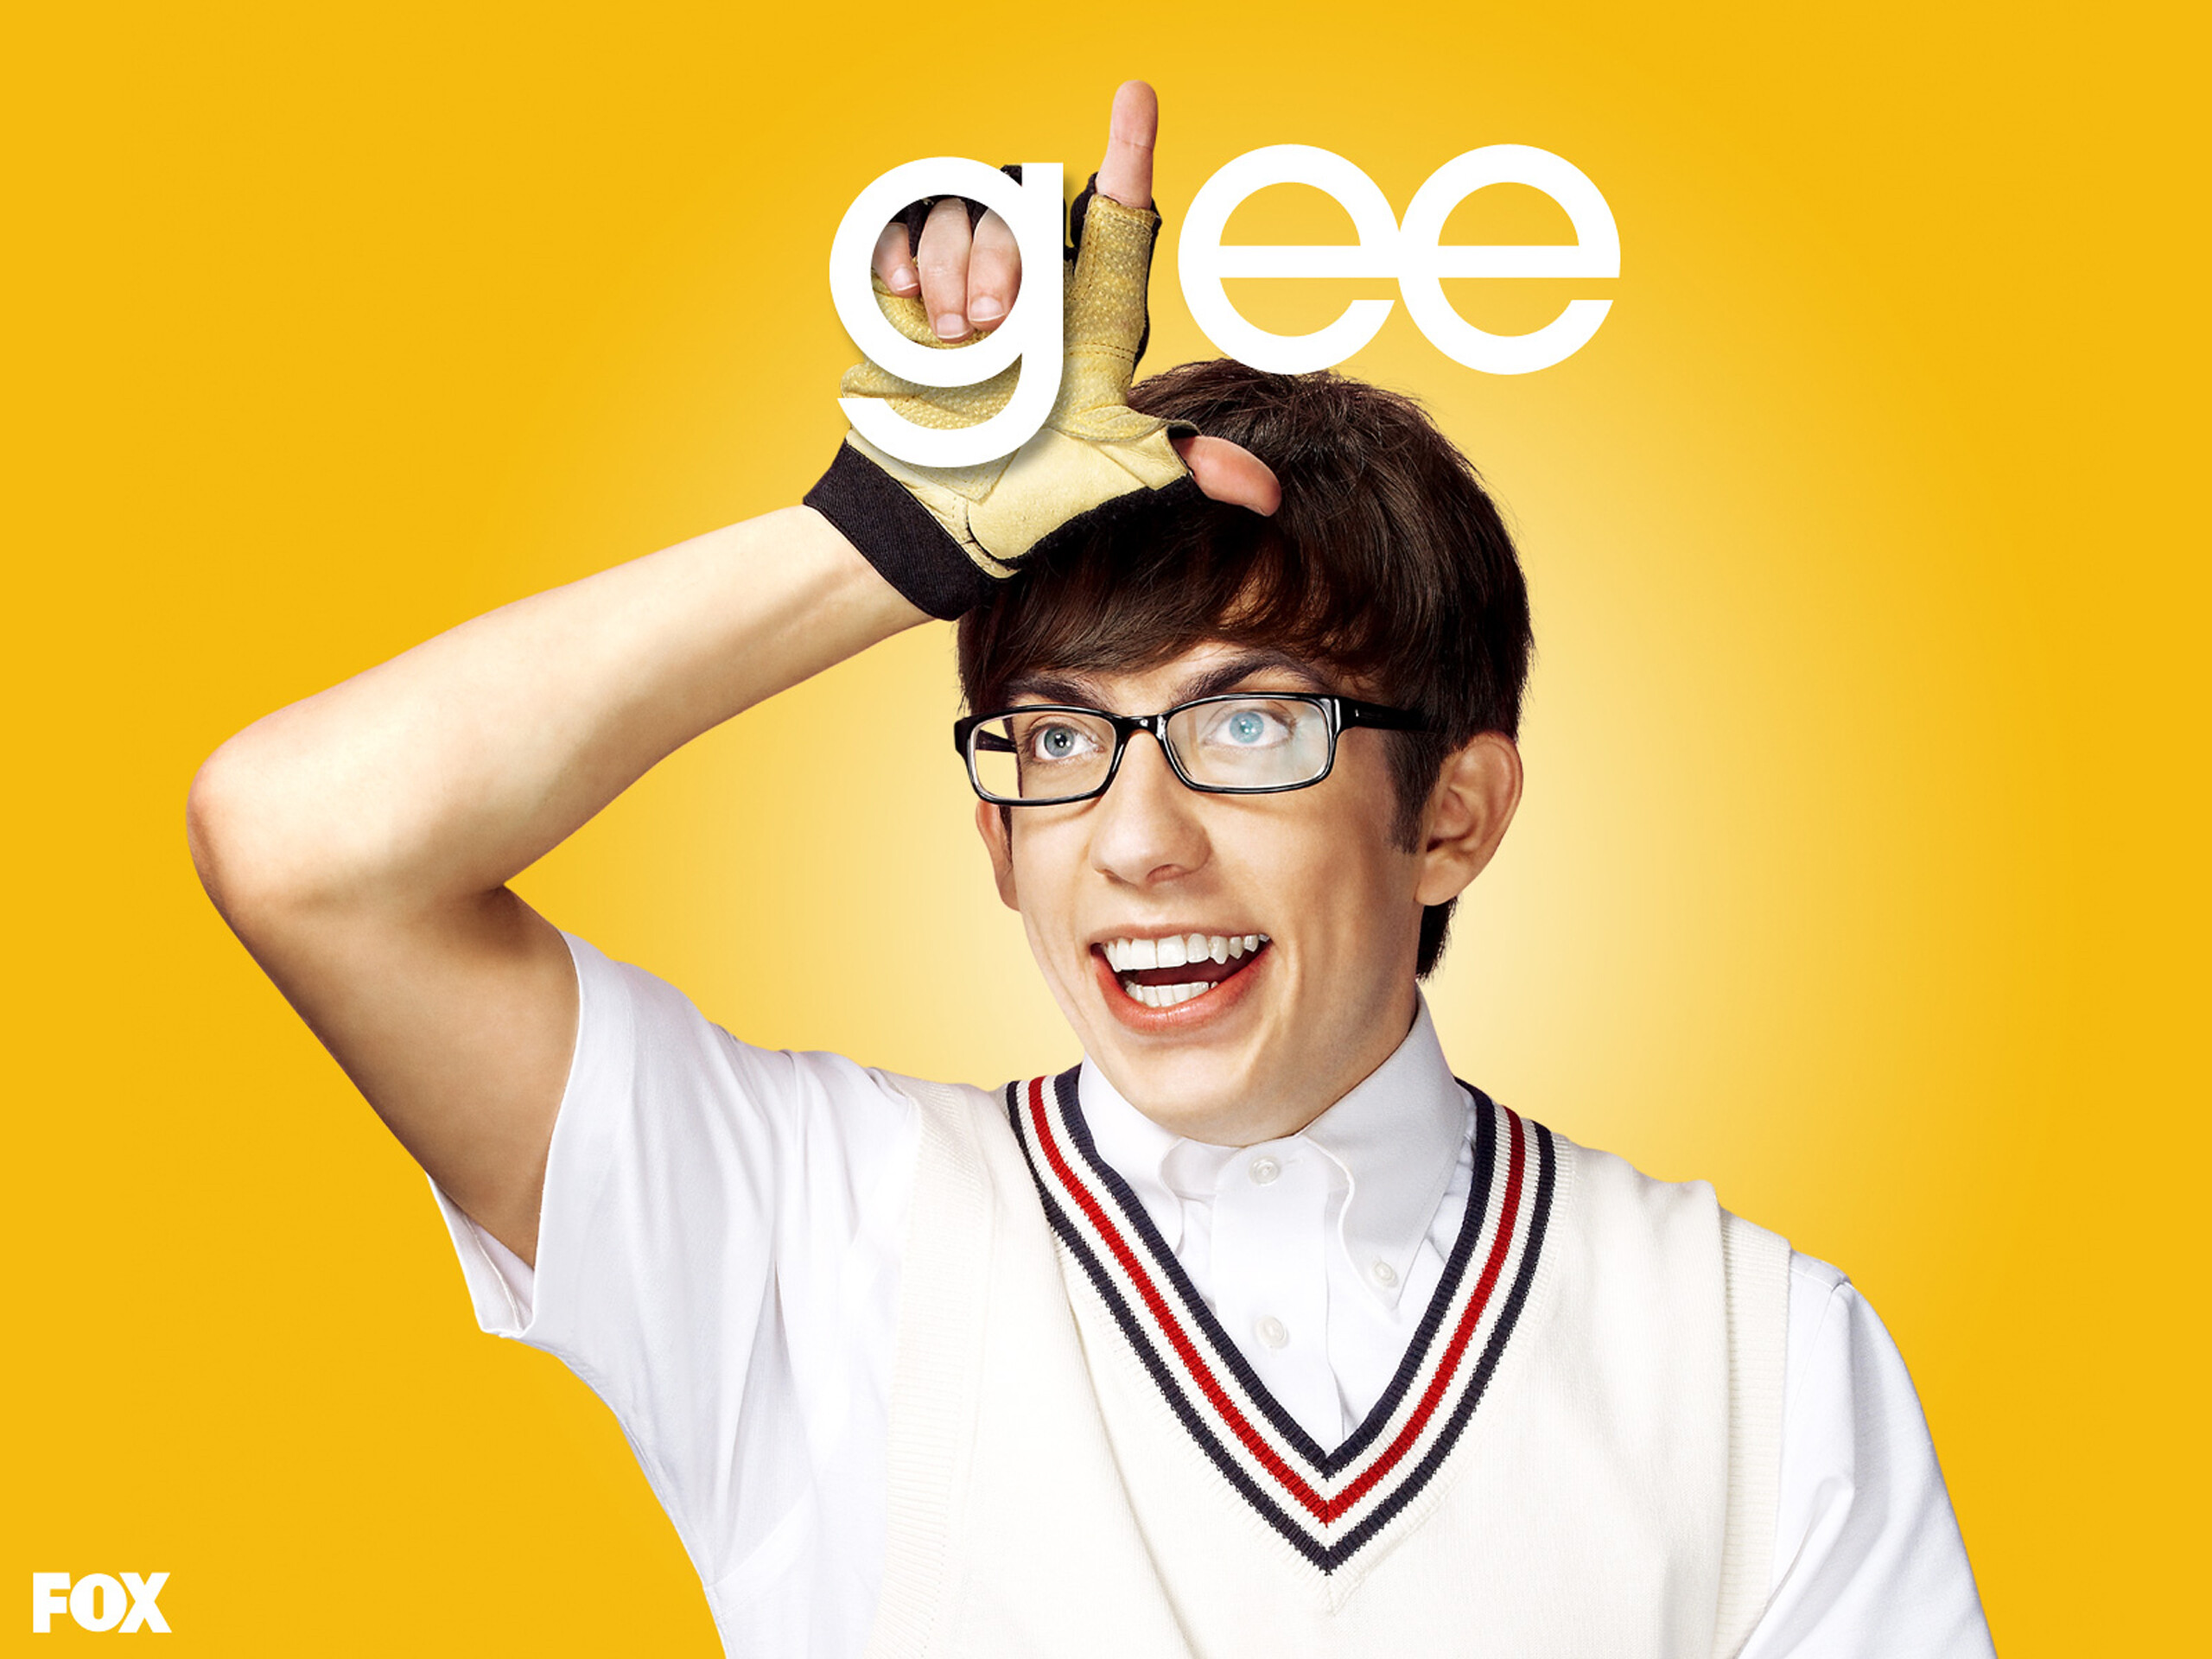 Glee (TV series): Kevin McHale as Artie Abrams, A guitarist and paraplegic manual wheelchair user. 2560x1920 HD Wallpaper.